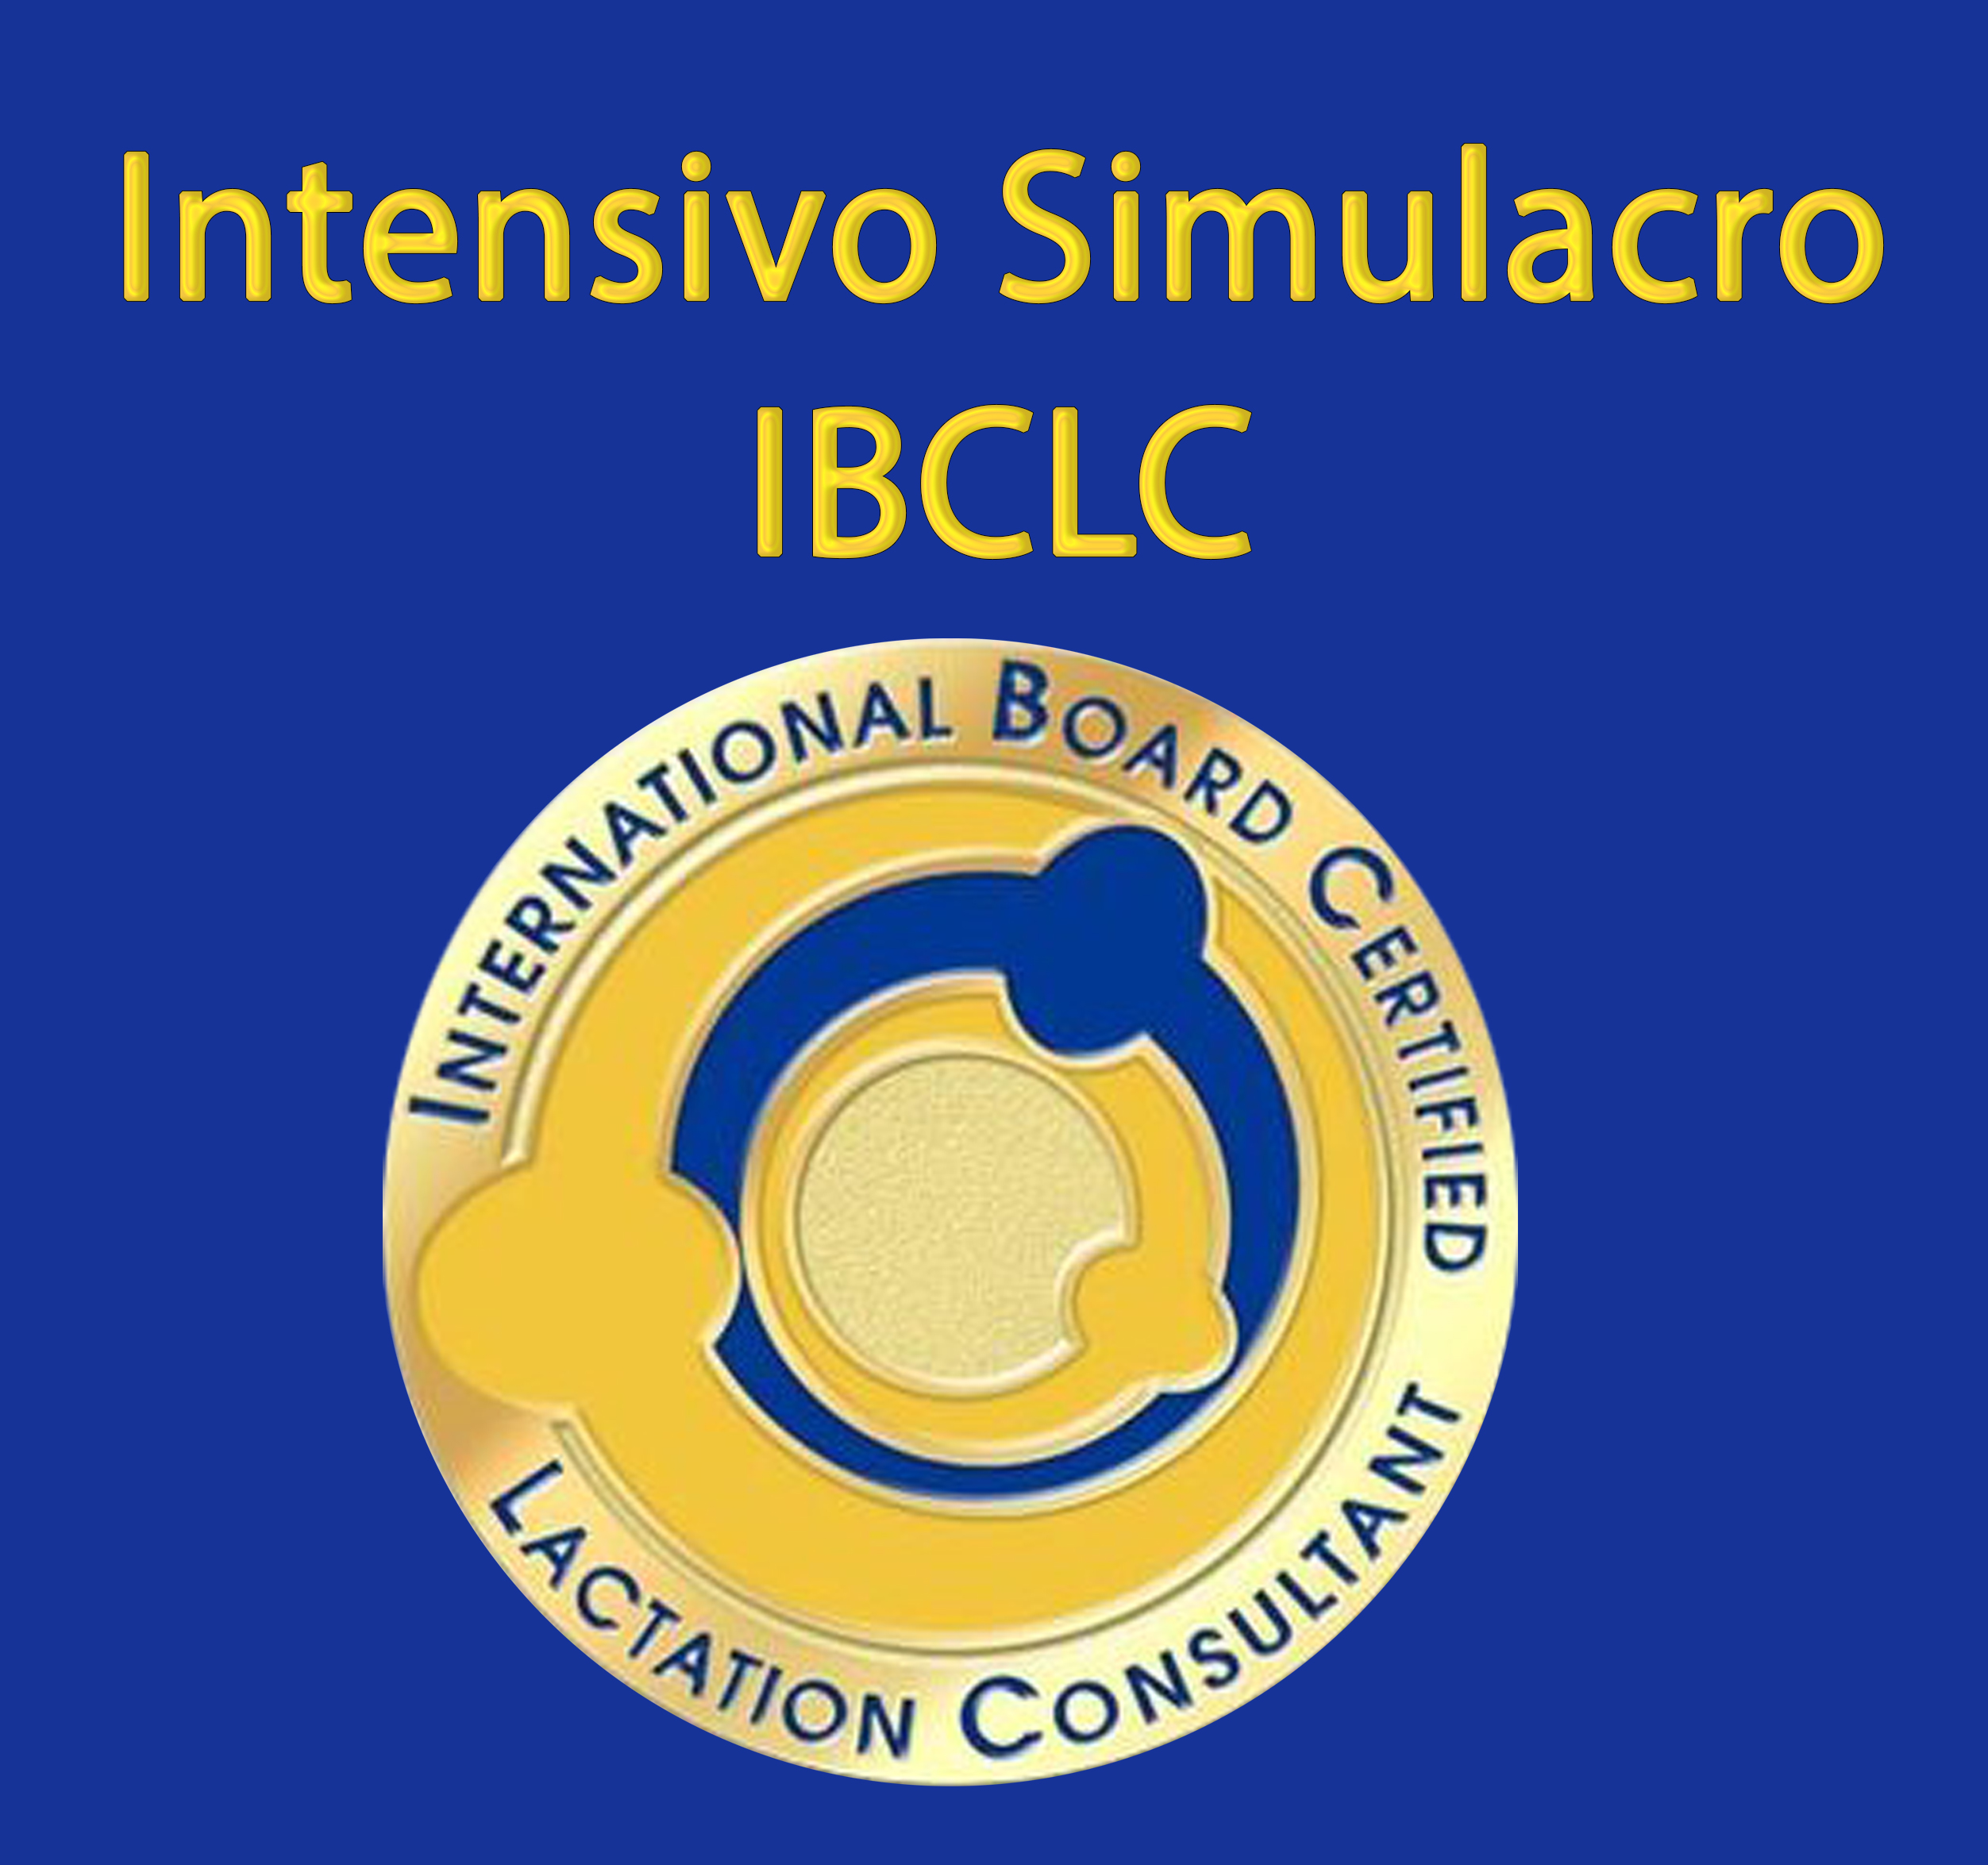 Curso Internacional Simulacro Intensivo IBCLC